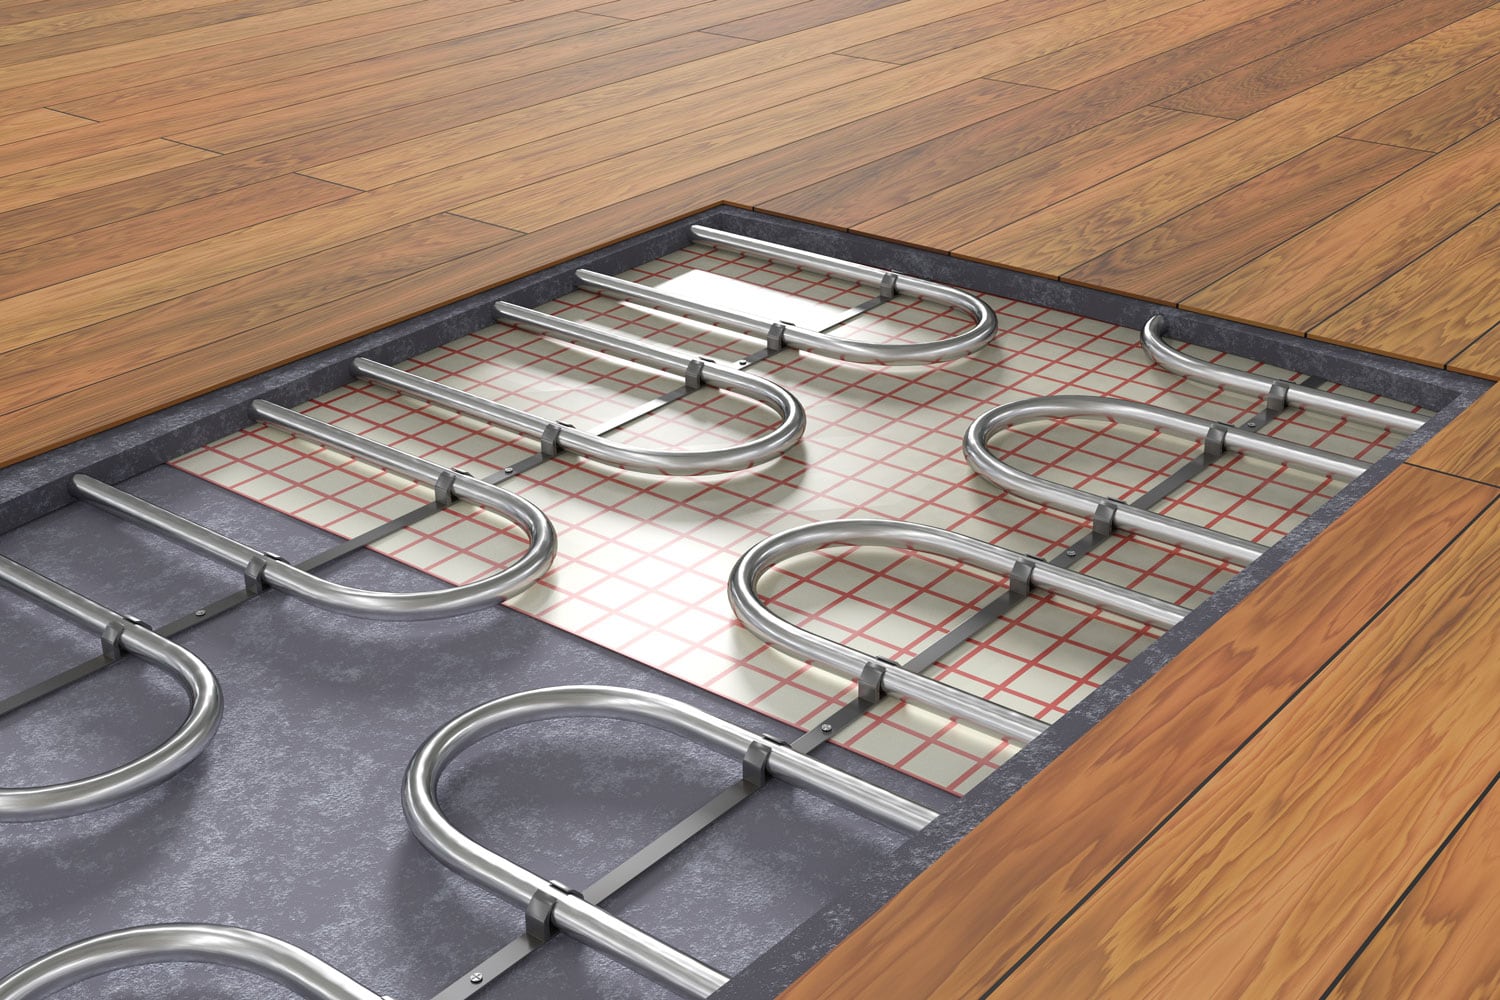 Underfloor heating system under wooden floor